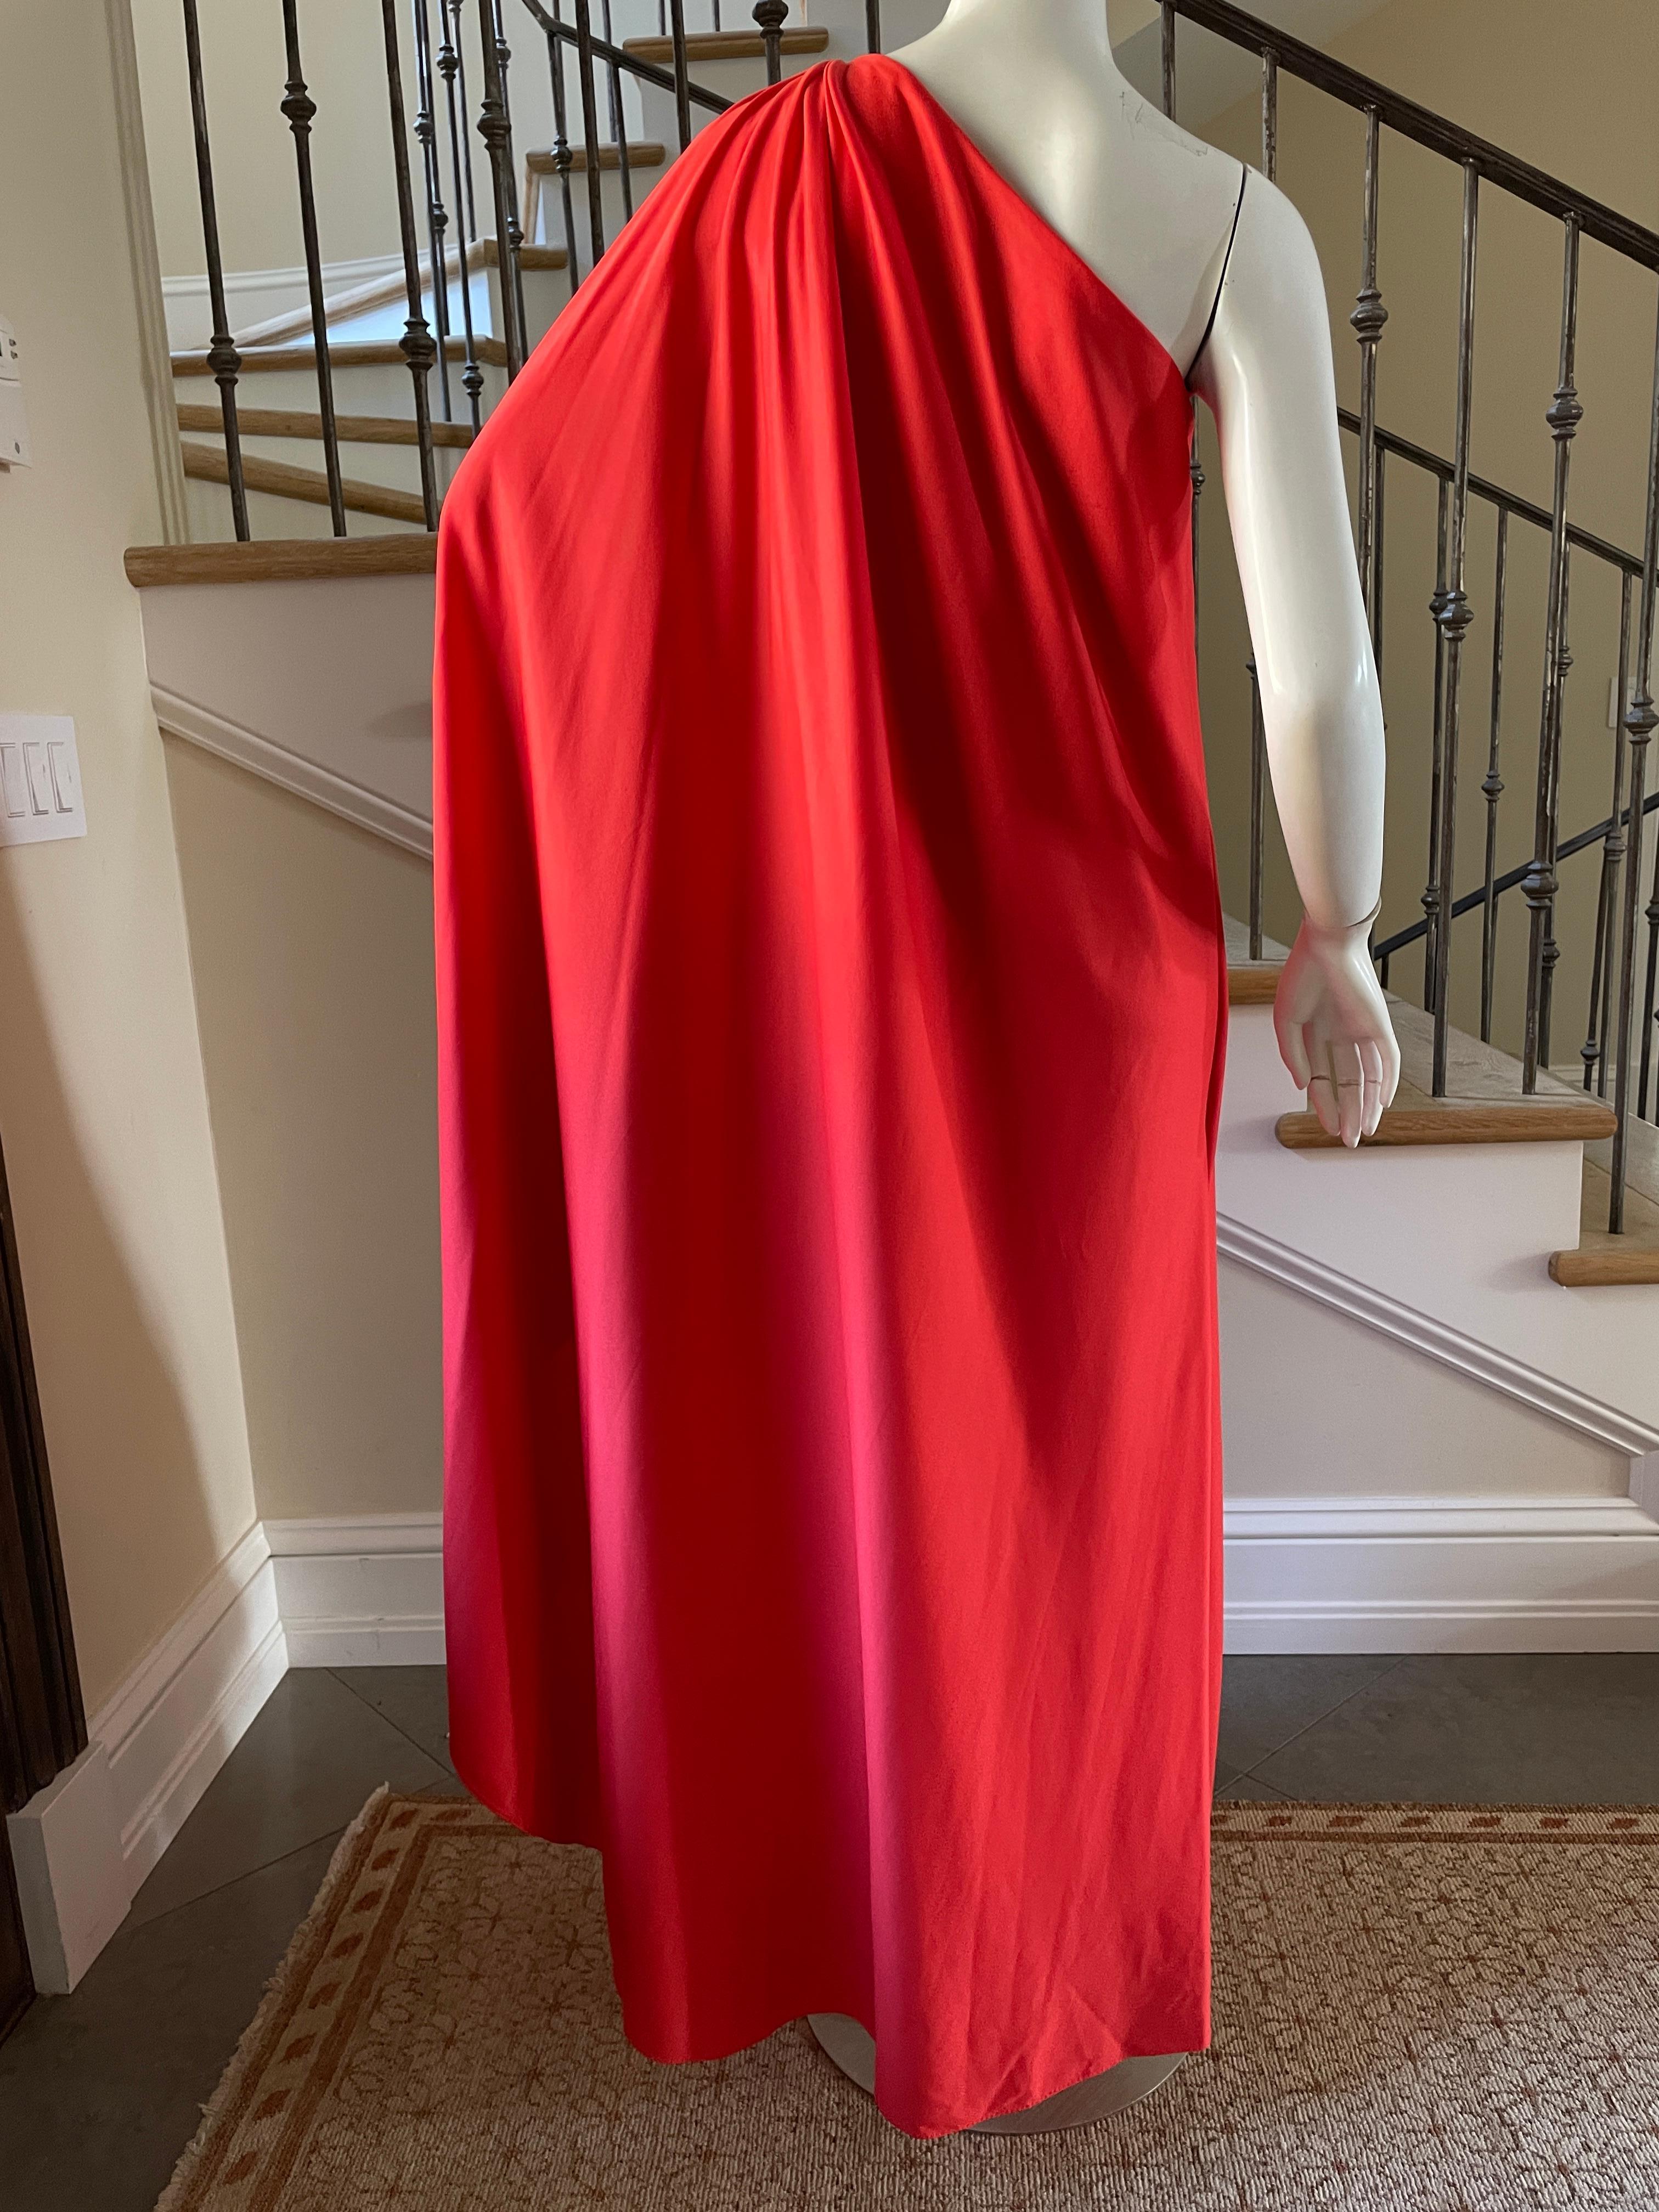 Halston Vintage 1980's Coral Red Dorian Caftan Dress for Halston IV For Sale 5